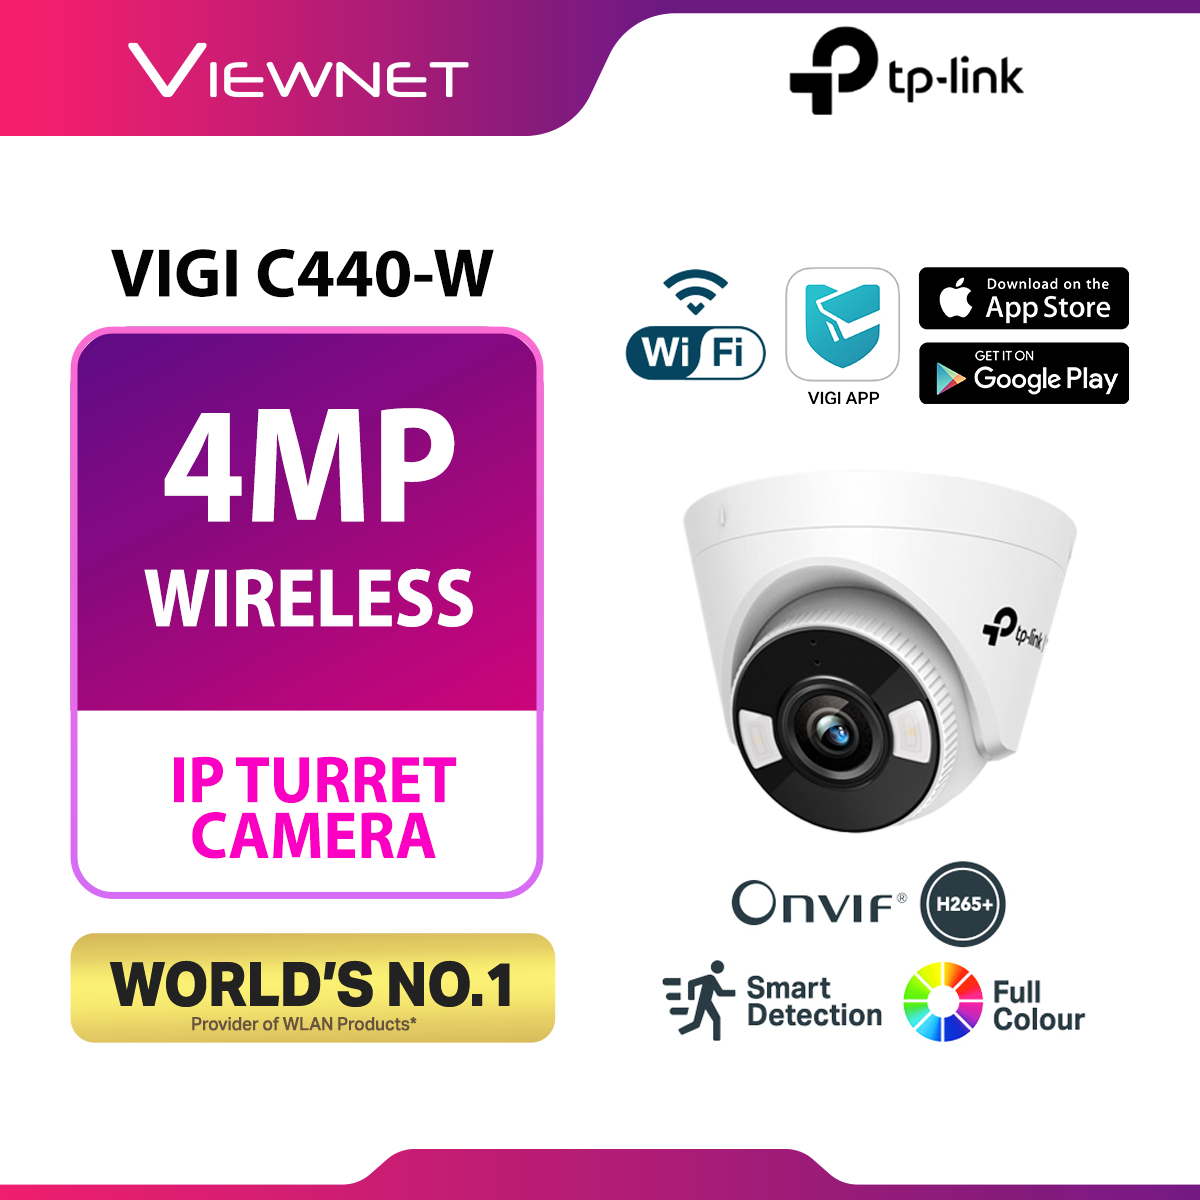 TP-Link VIGI C440-W 4MP Indoor CCTV Full Colour Ultra-High Definition Turret Network Camera Wire VIGI C440 & Wireless VIGI C440-W